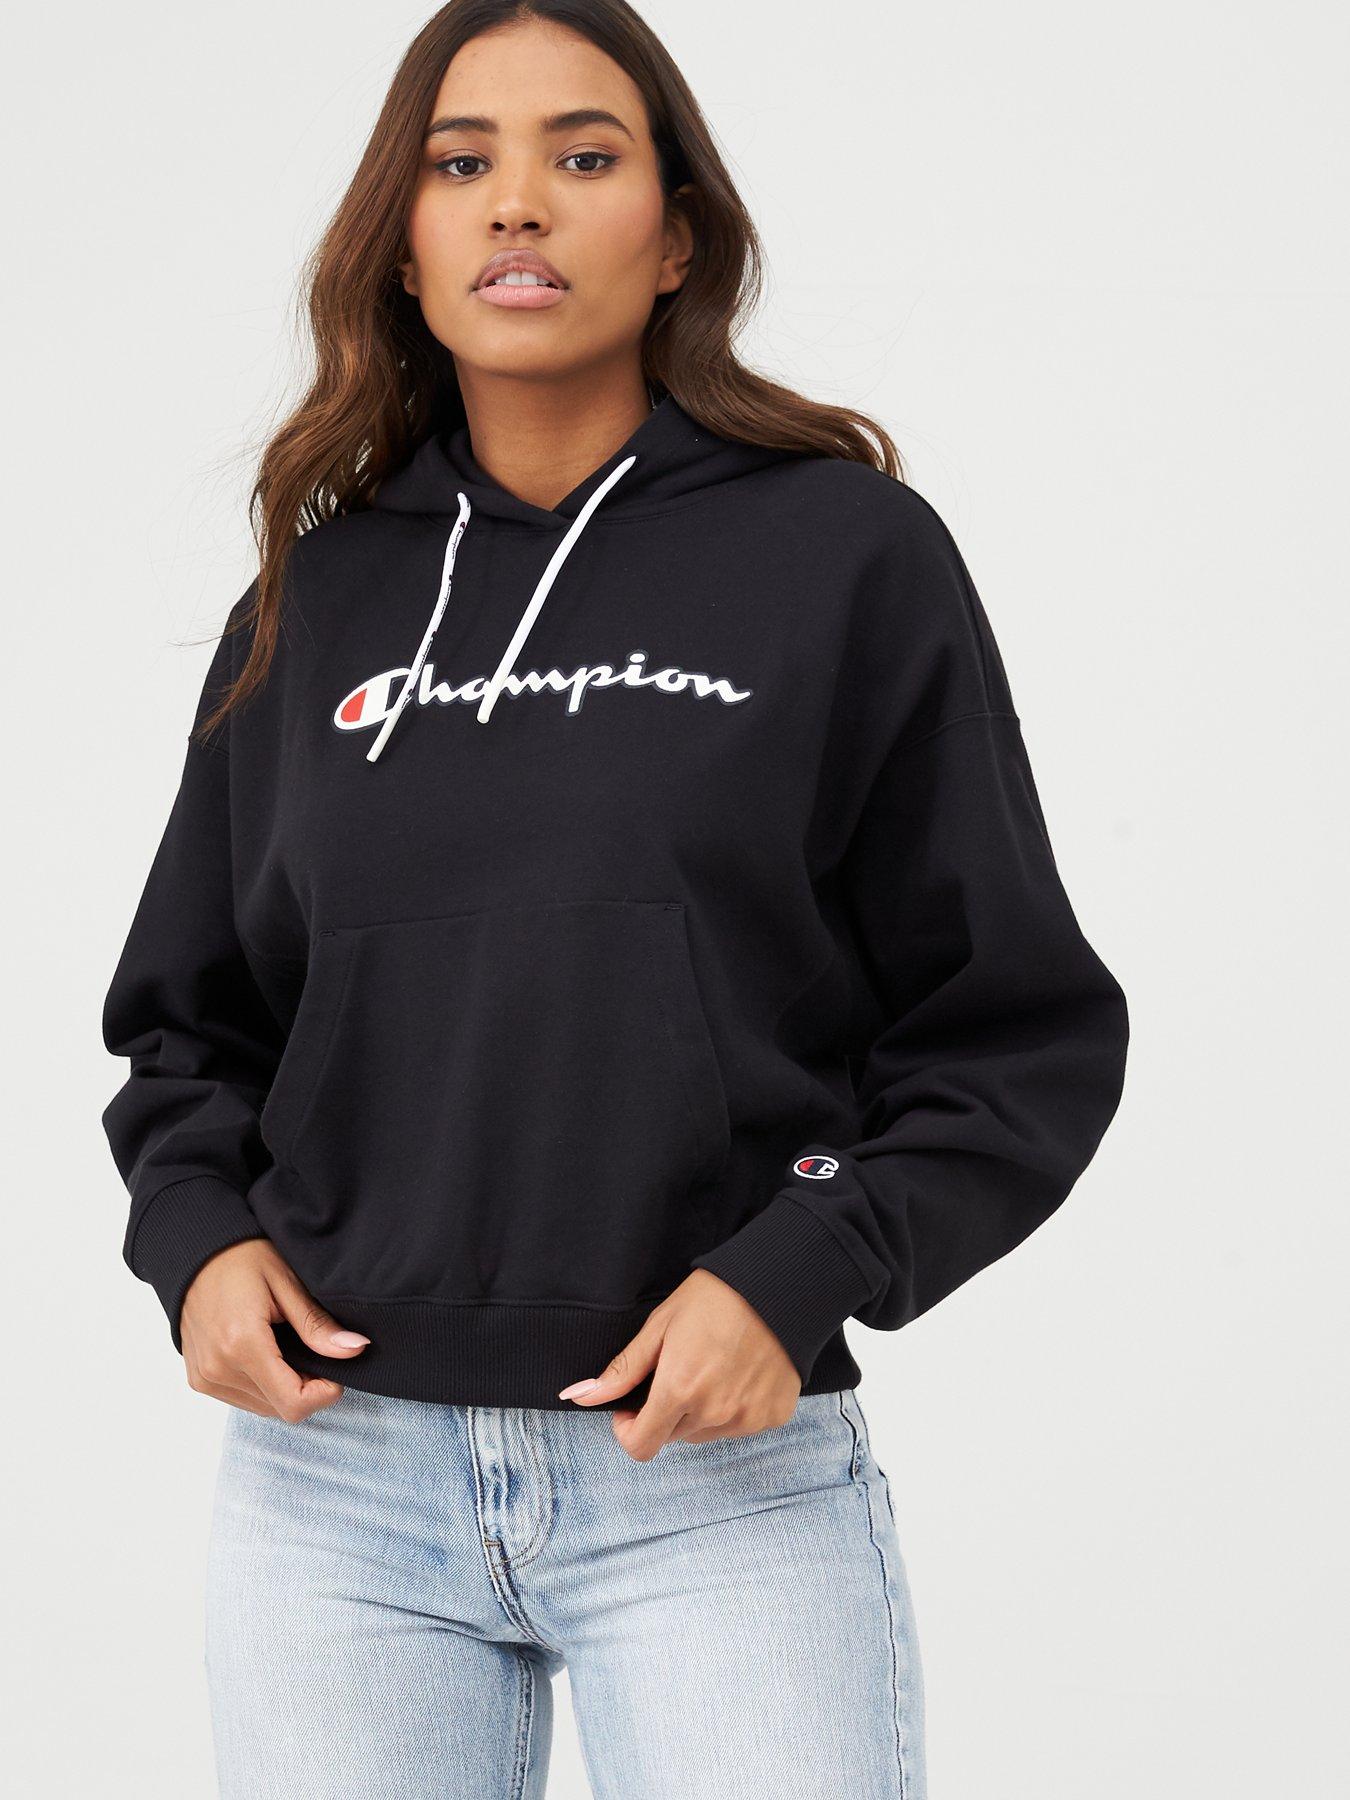 Champion Hooded Sweatshirt - Black 